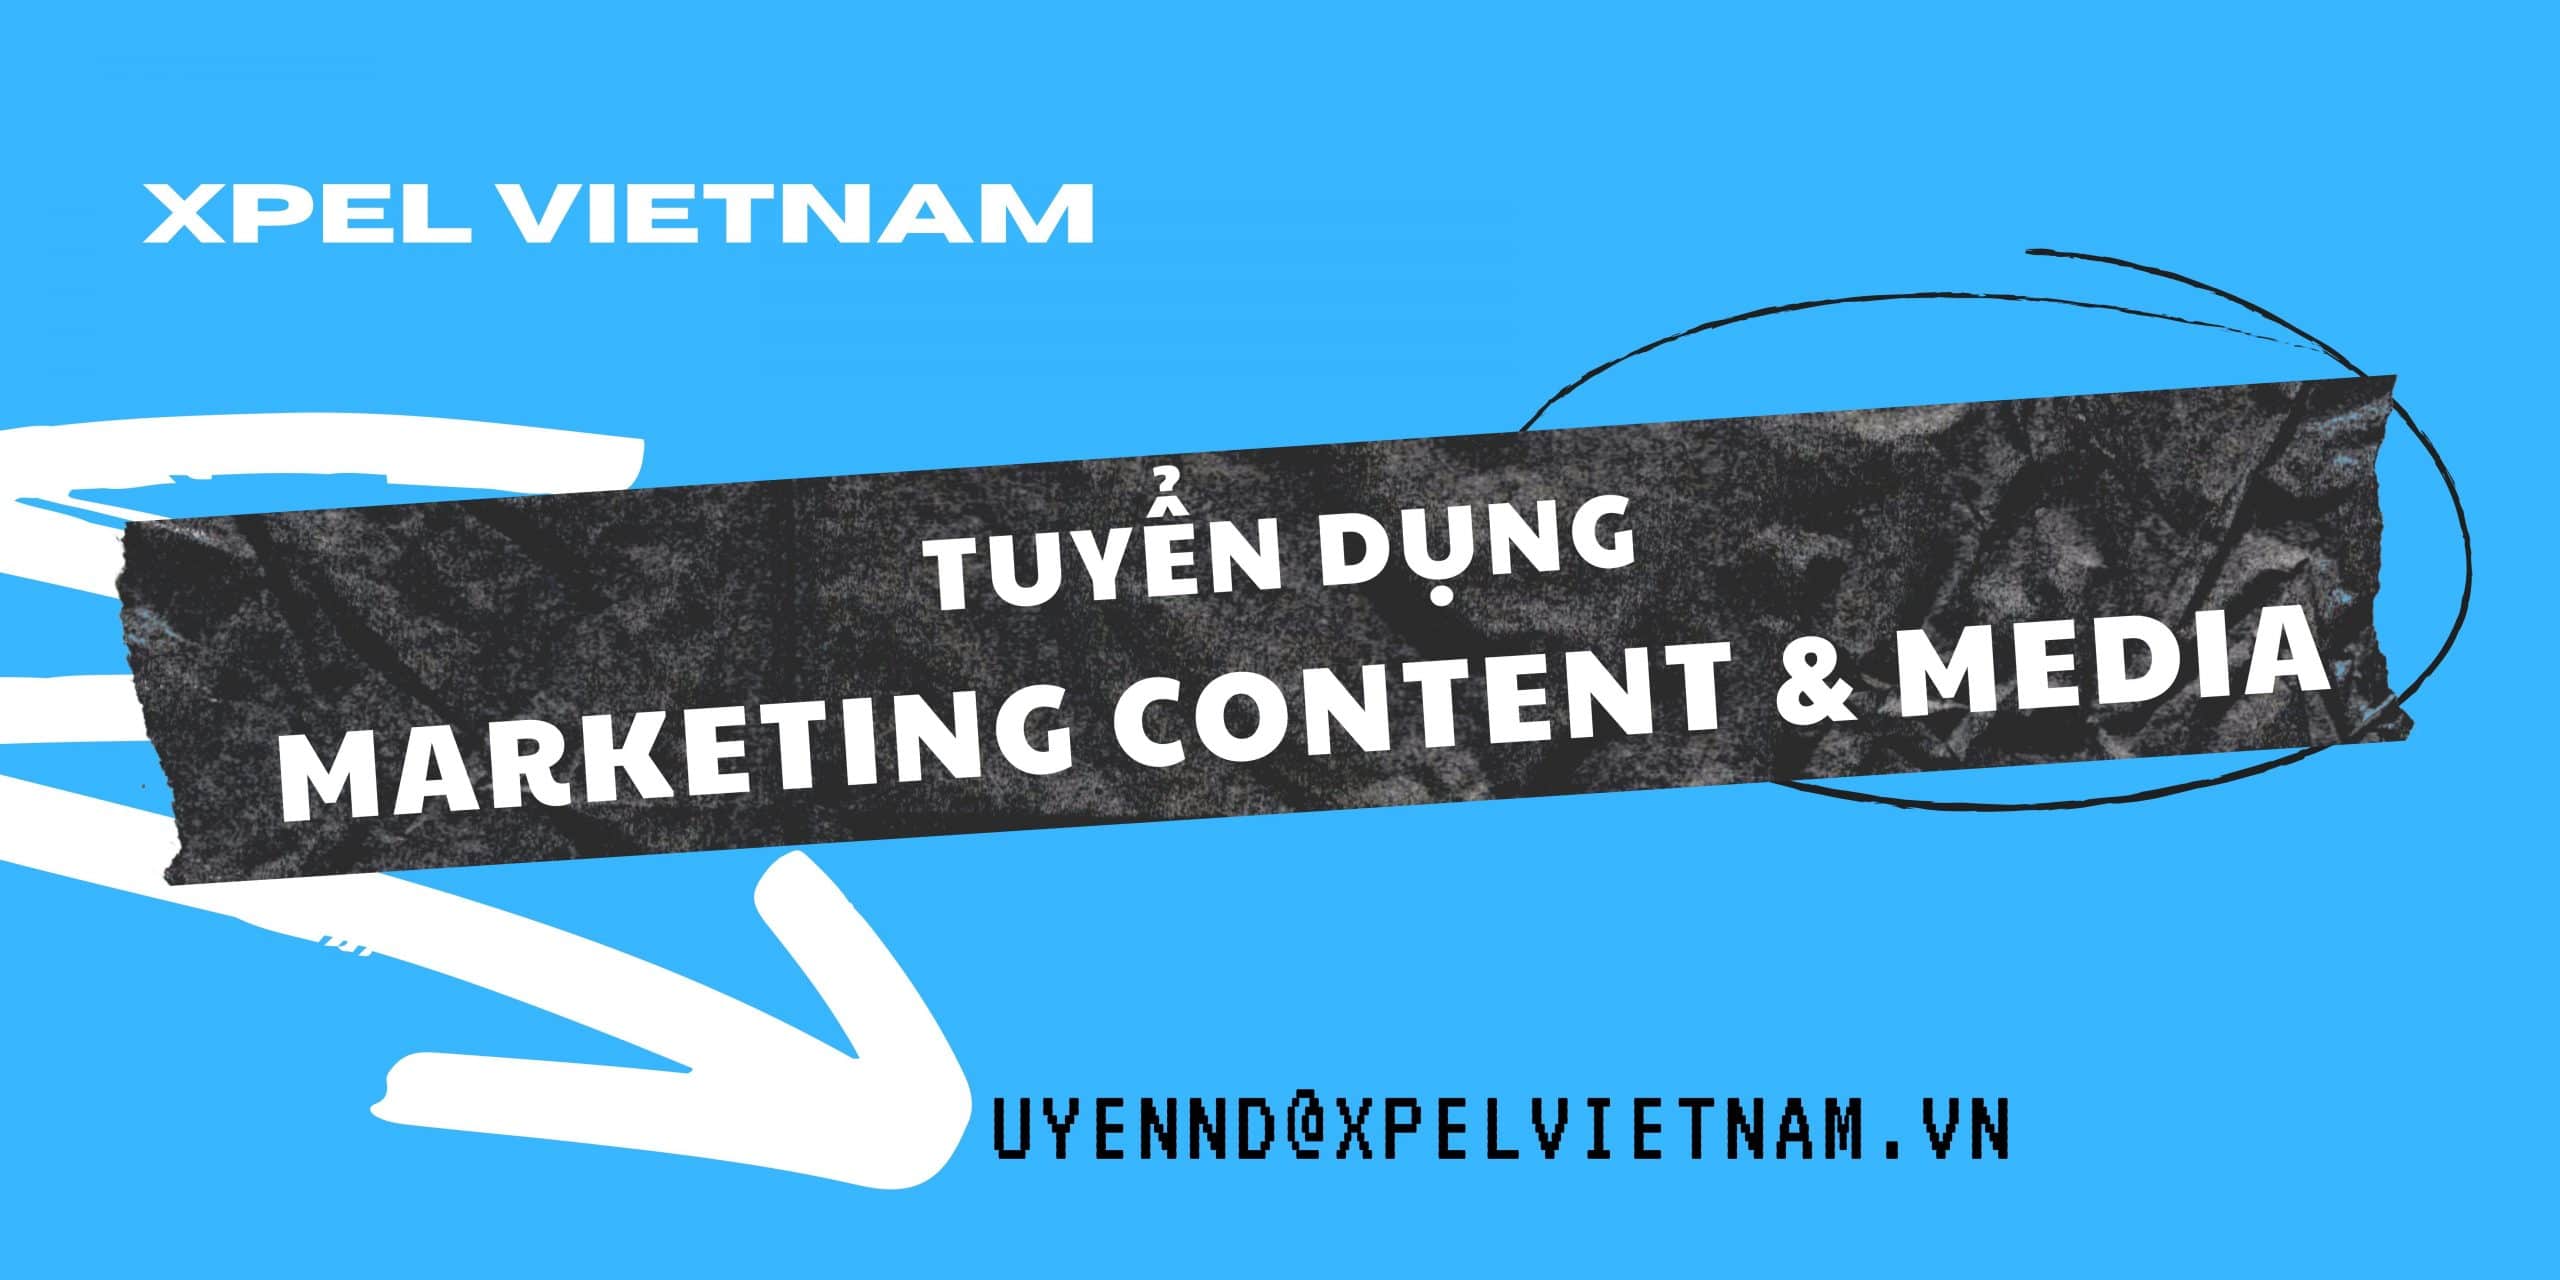 Tuyen dung Marketing Media XPEL Viet Nam scaled